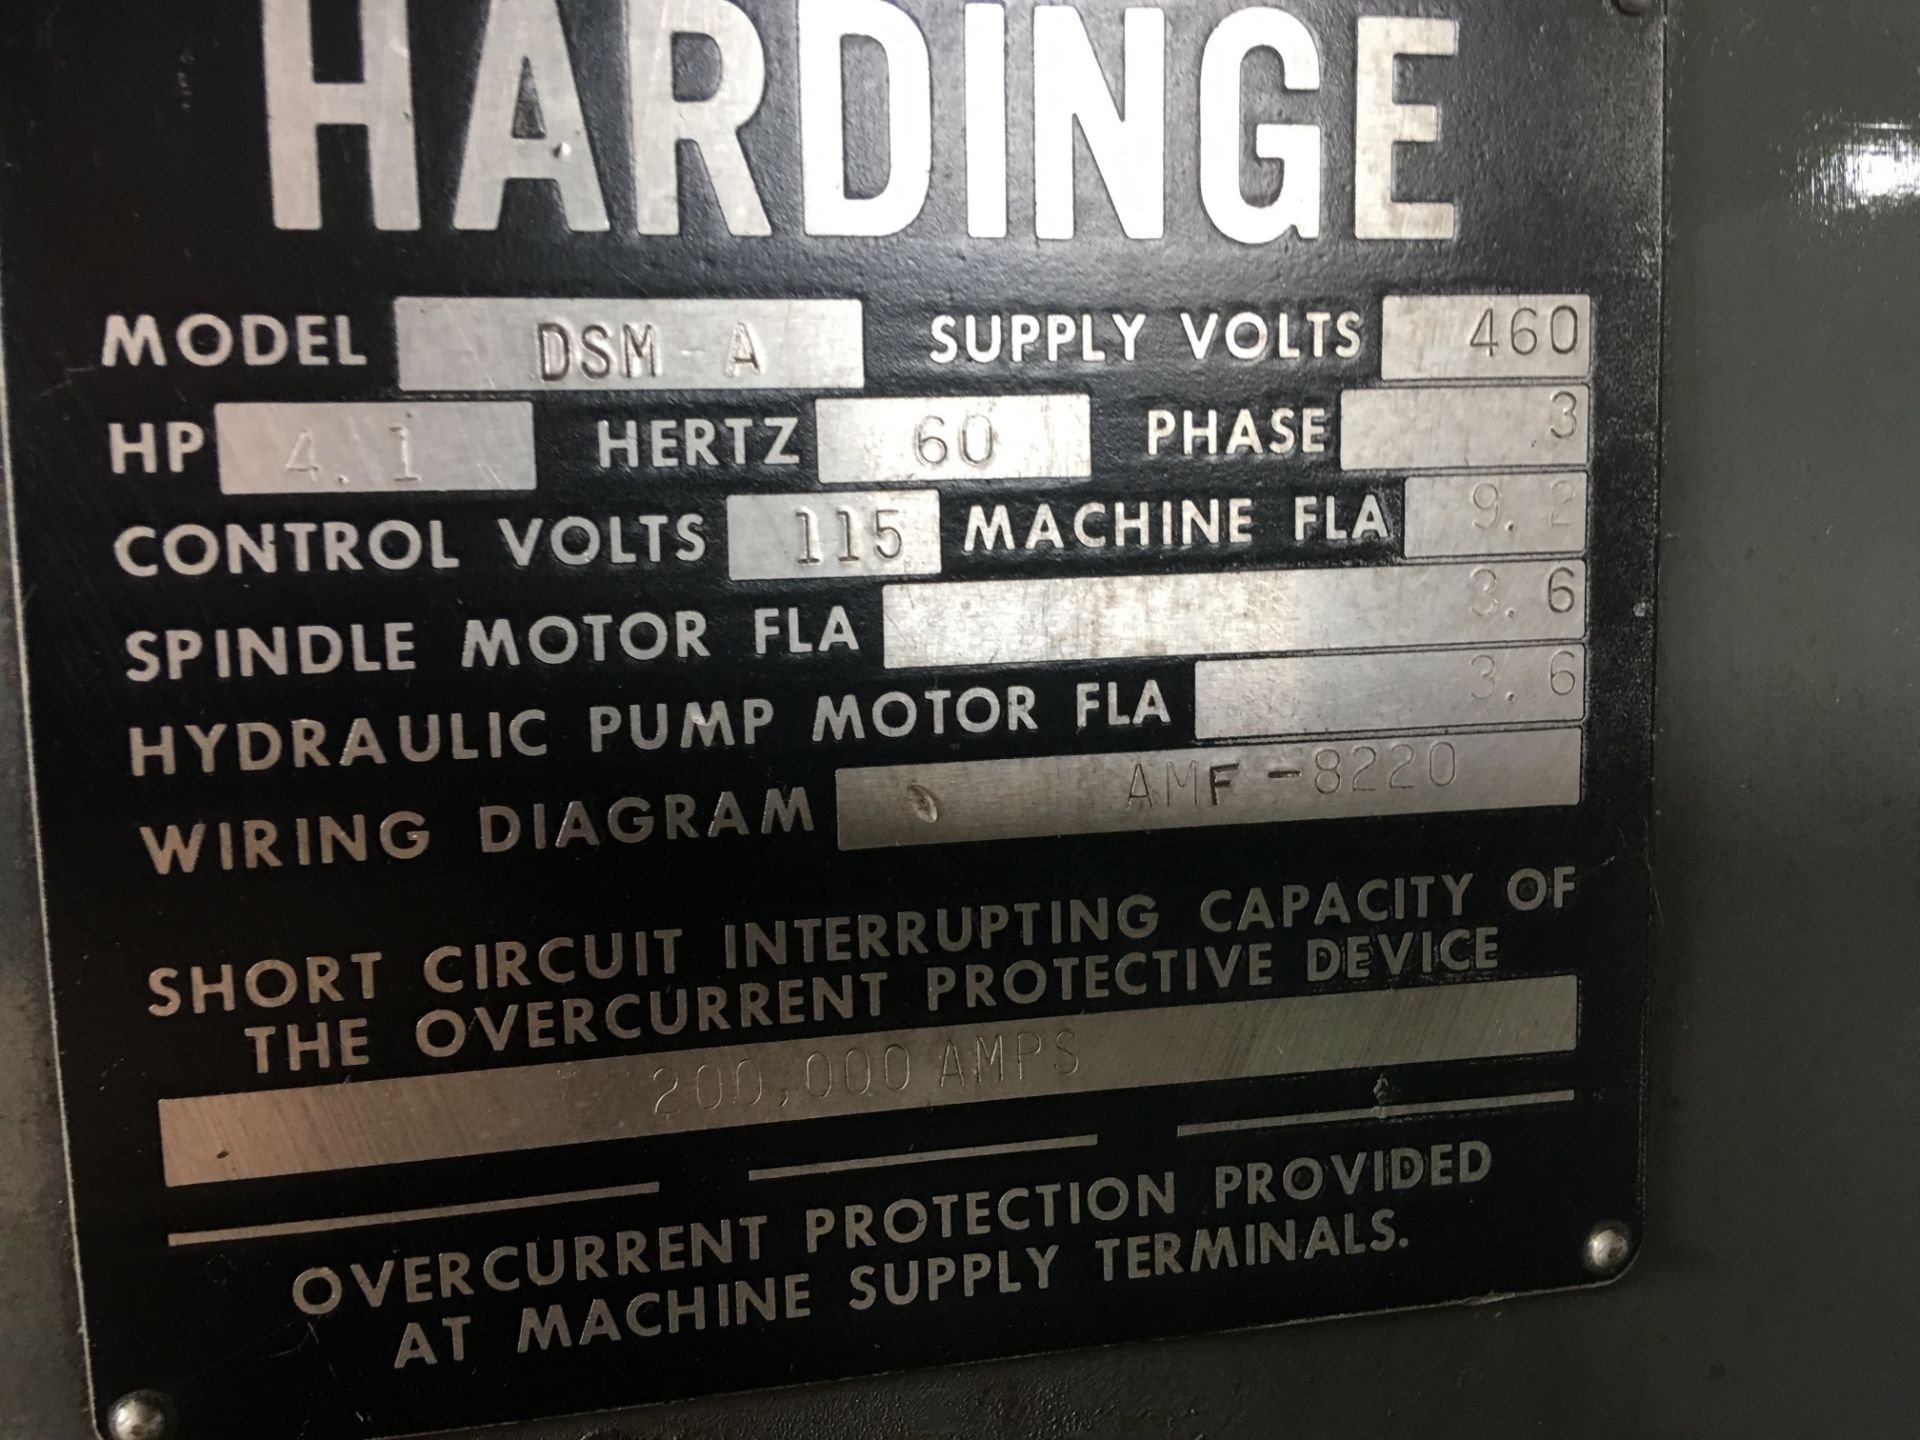 Hardinge Model DSM-A Automatic Screw Machine - Image 6 of 6